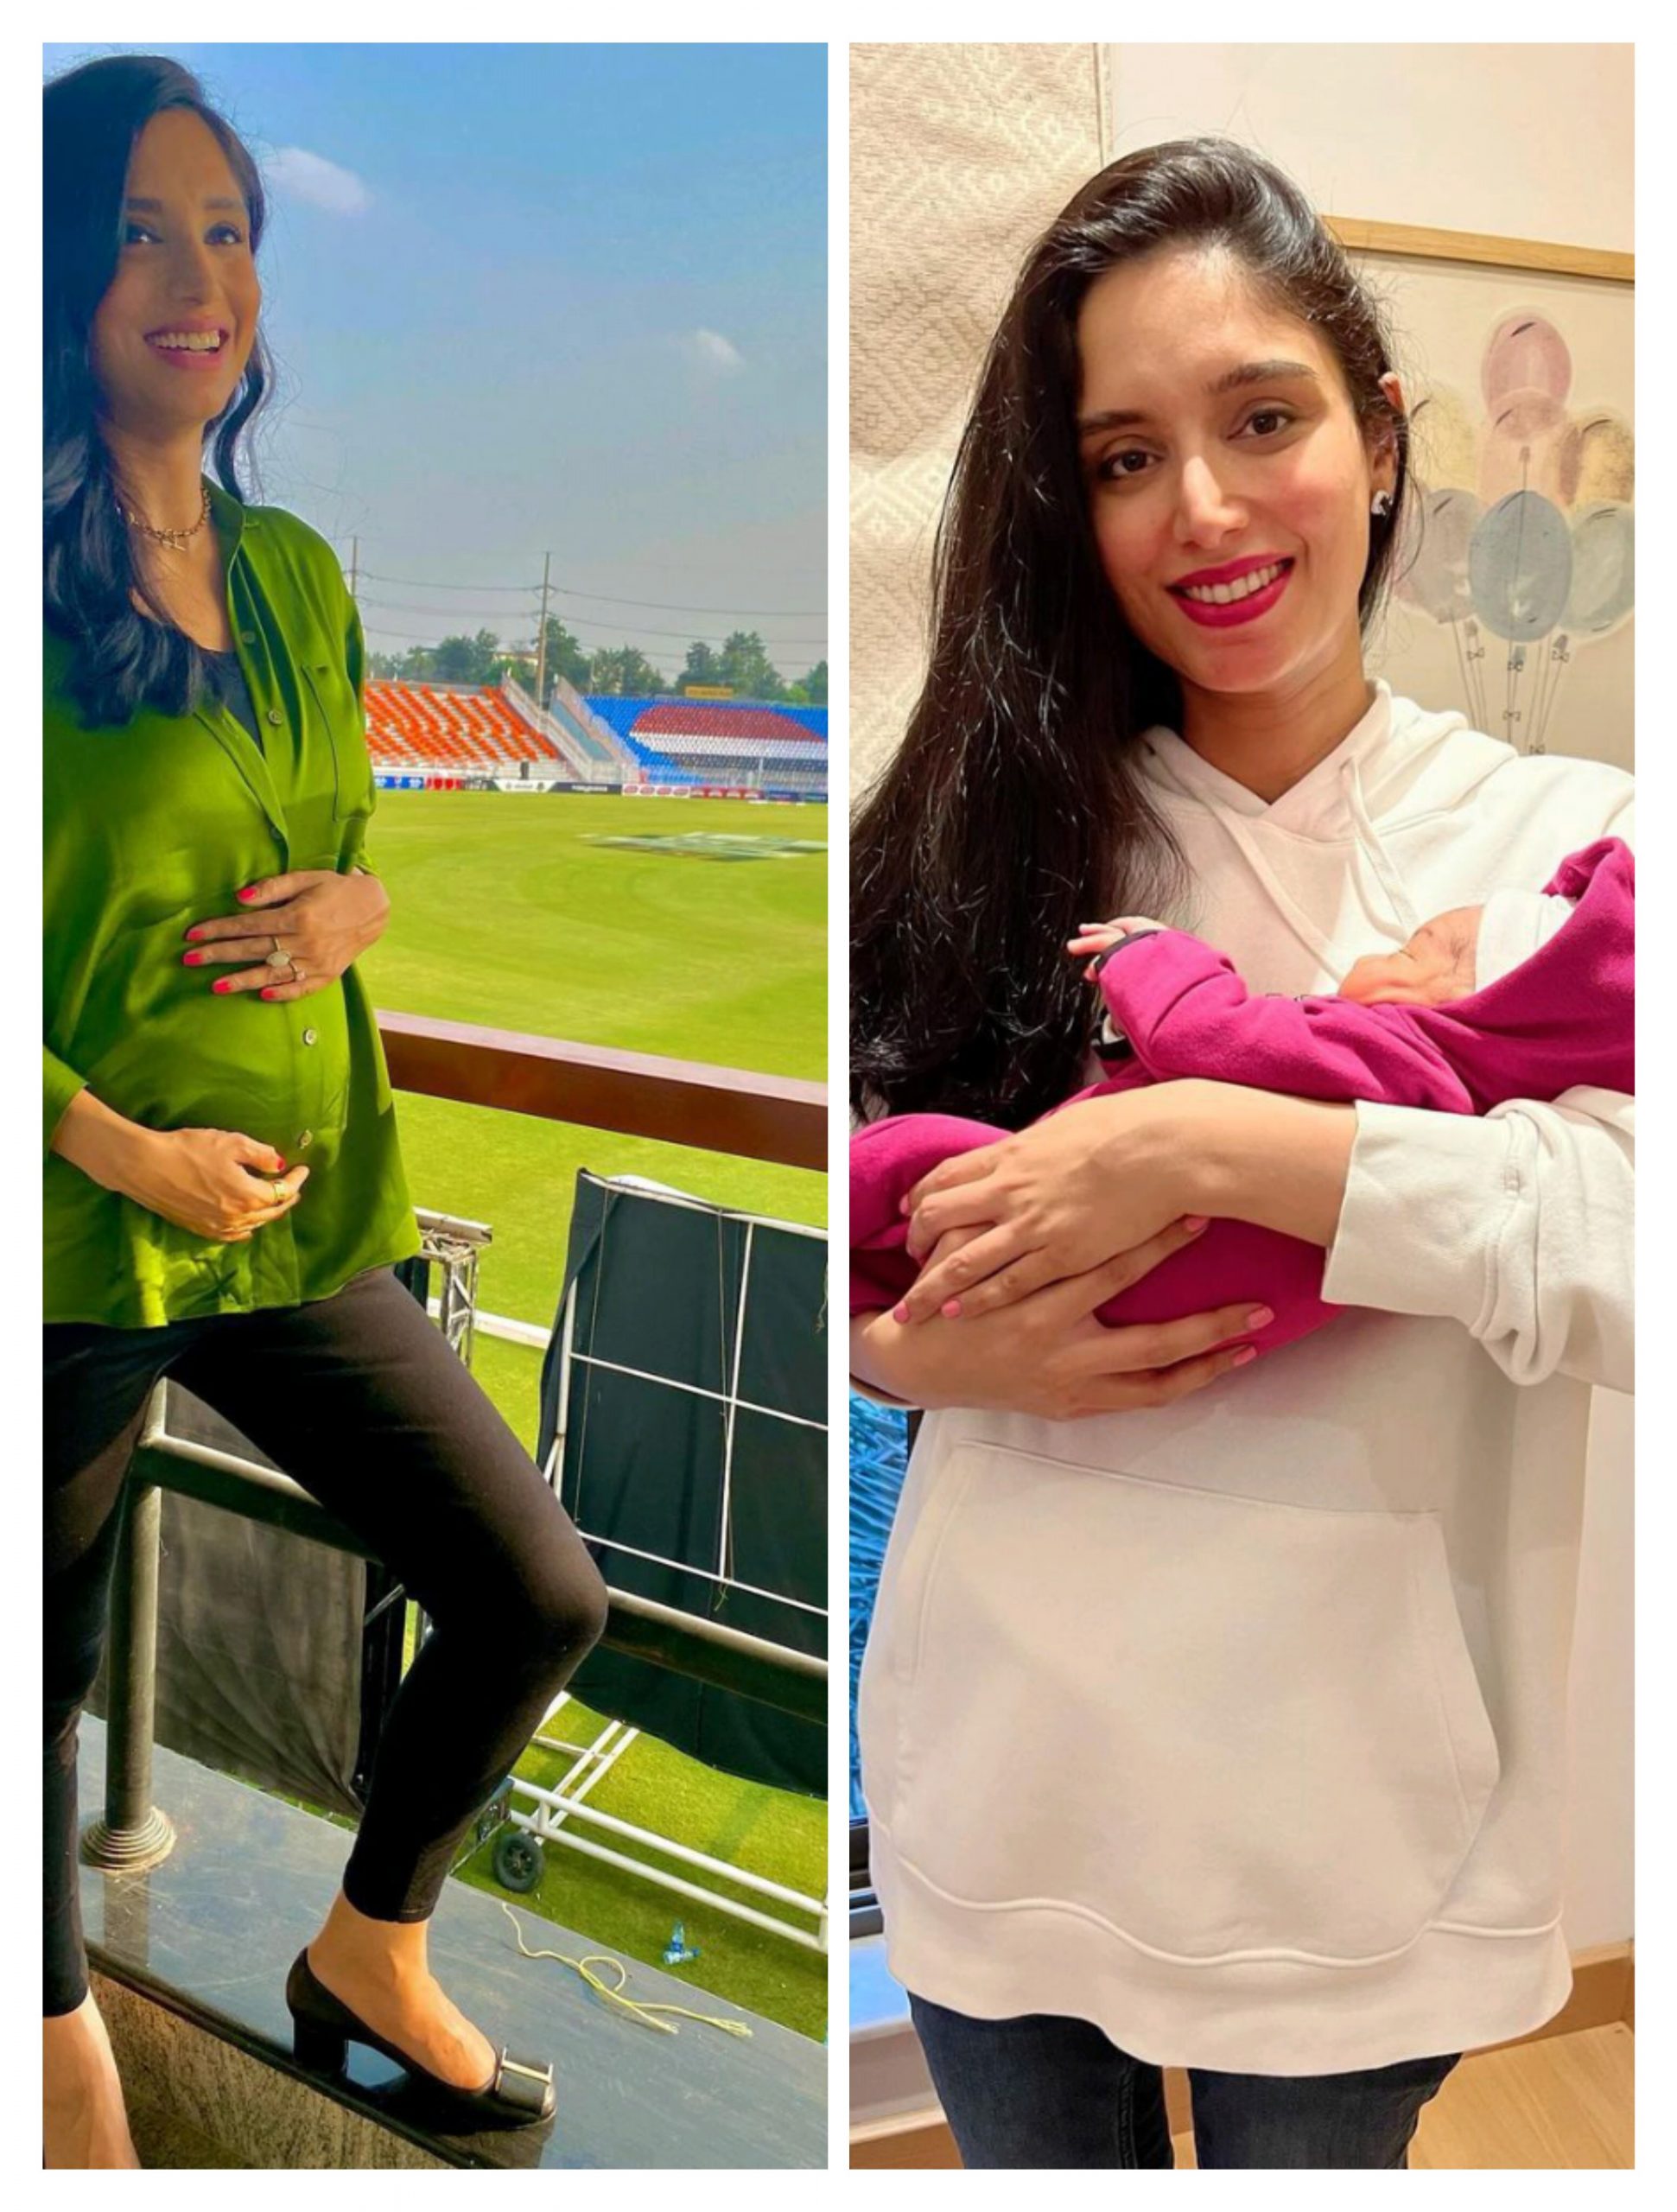 Lahore Pakistan’s leading sports anchor Zainab Abbas gave birth to a son.